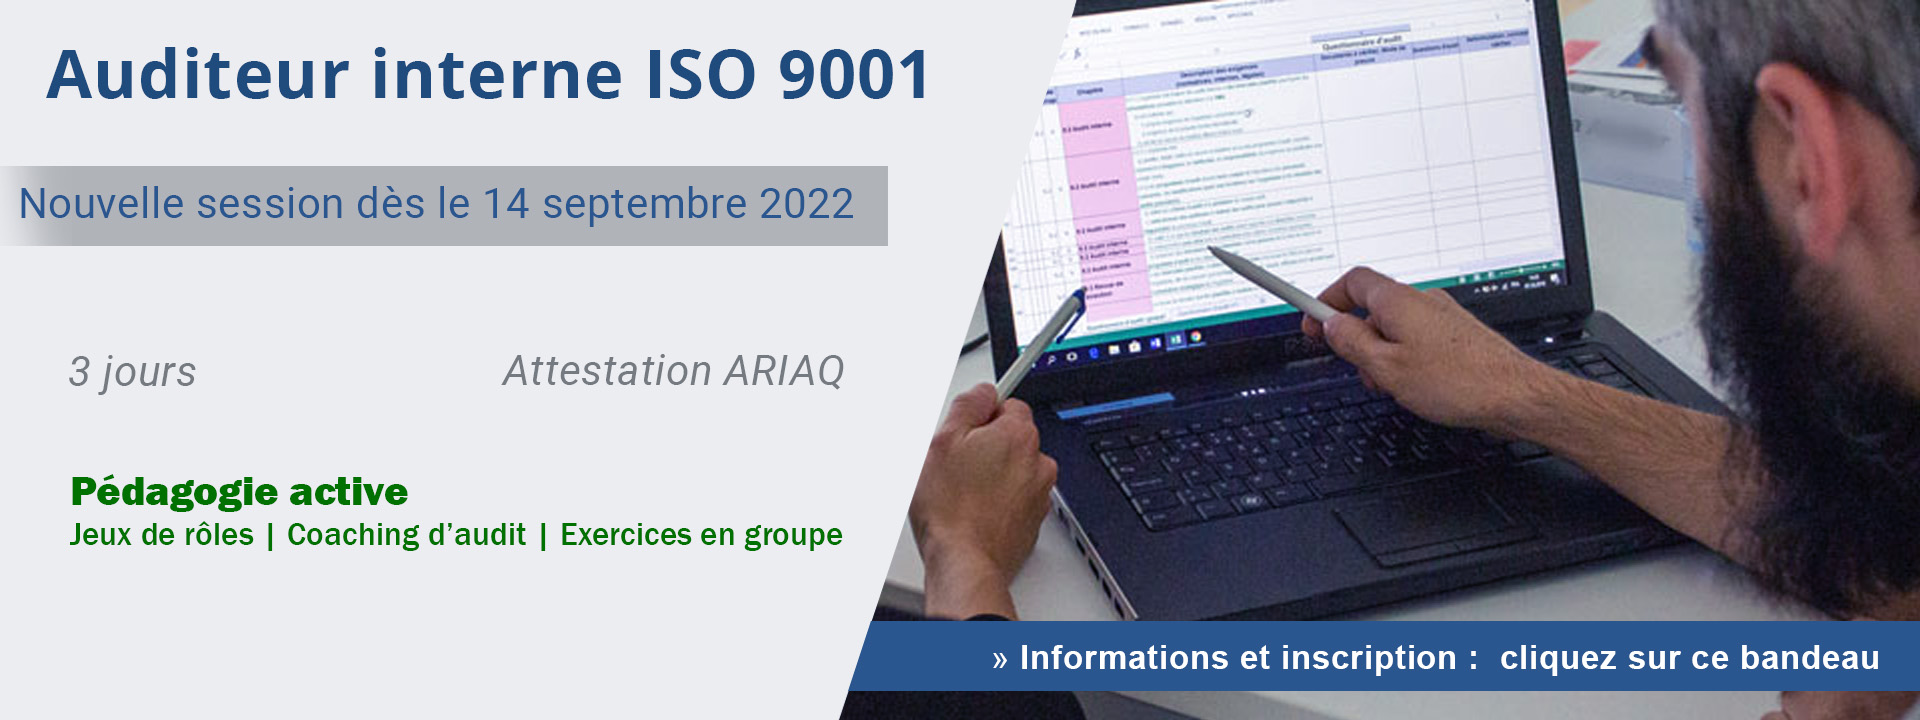 Auditeur interne ISO 9001